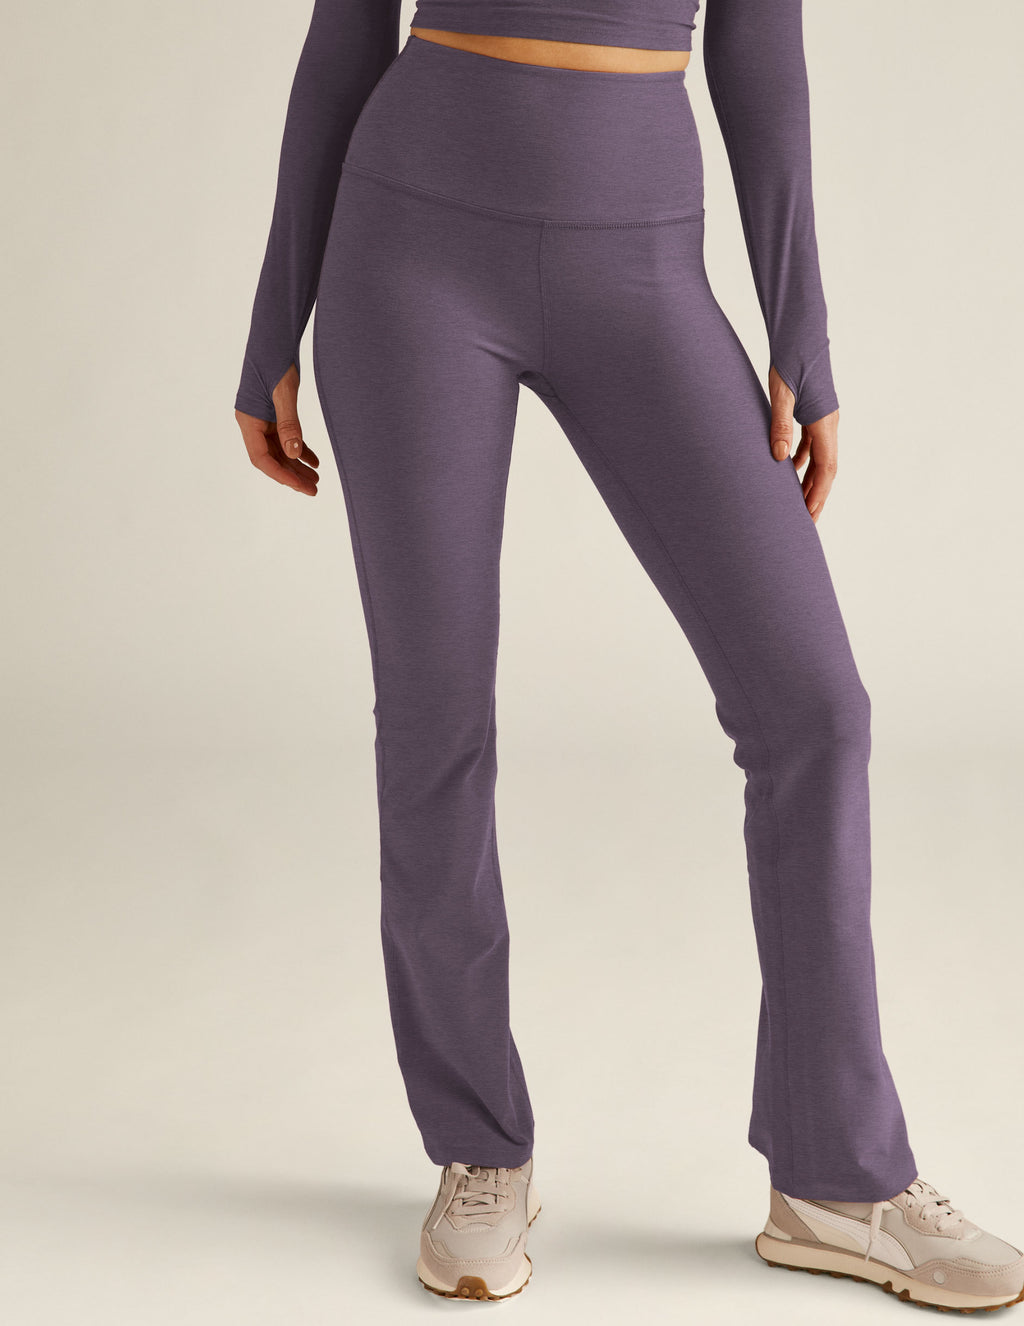 Magenta UV 50+ Lucy Purple Performance Leggings Yoga Pants - Women